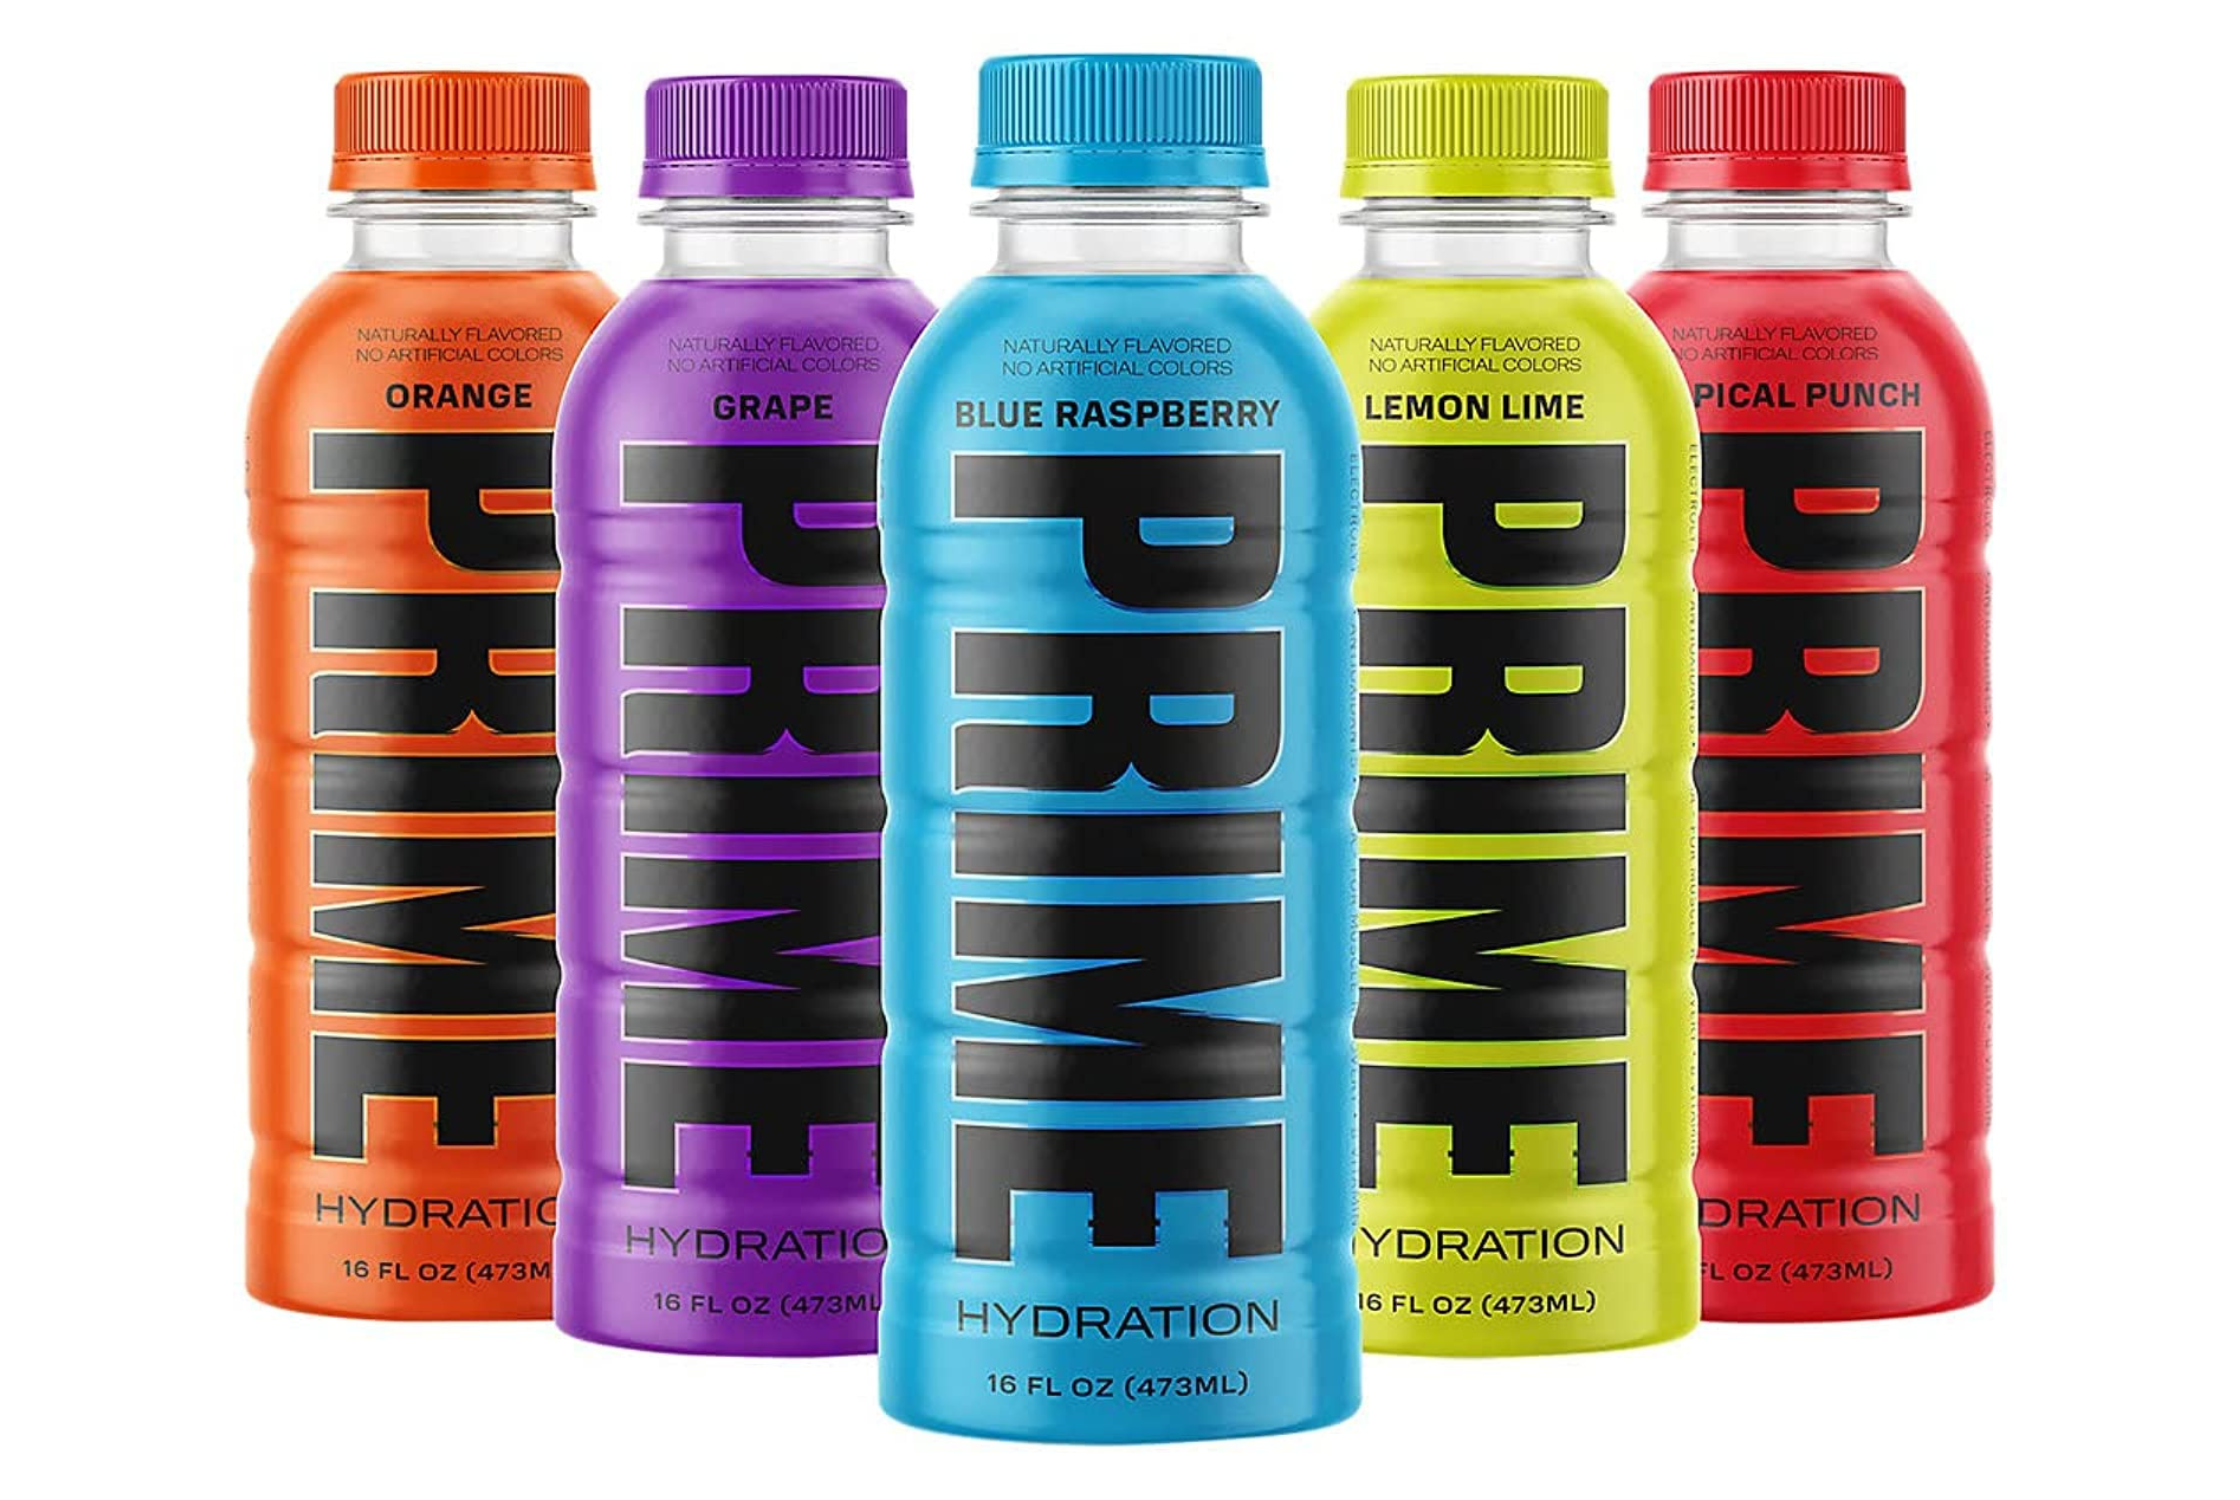 Prime Hydration Drink Beverage By Logan Paul x KSI 4 bottle Lot